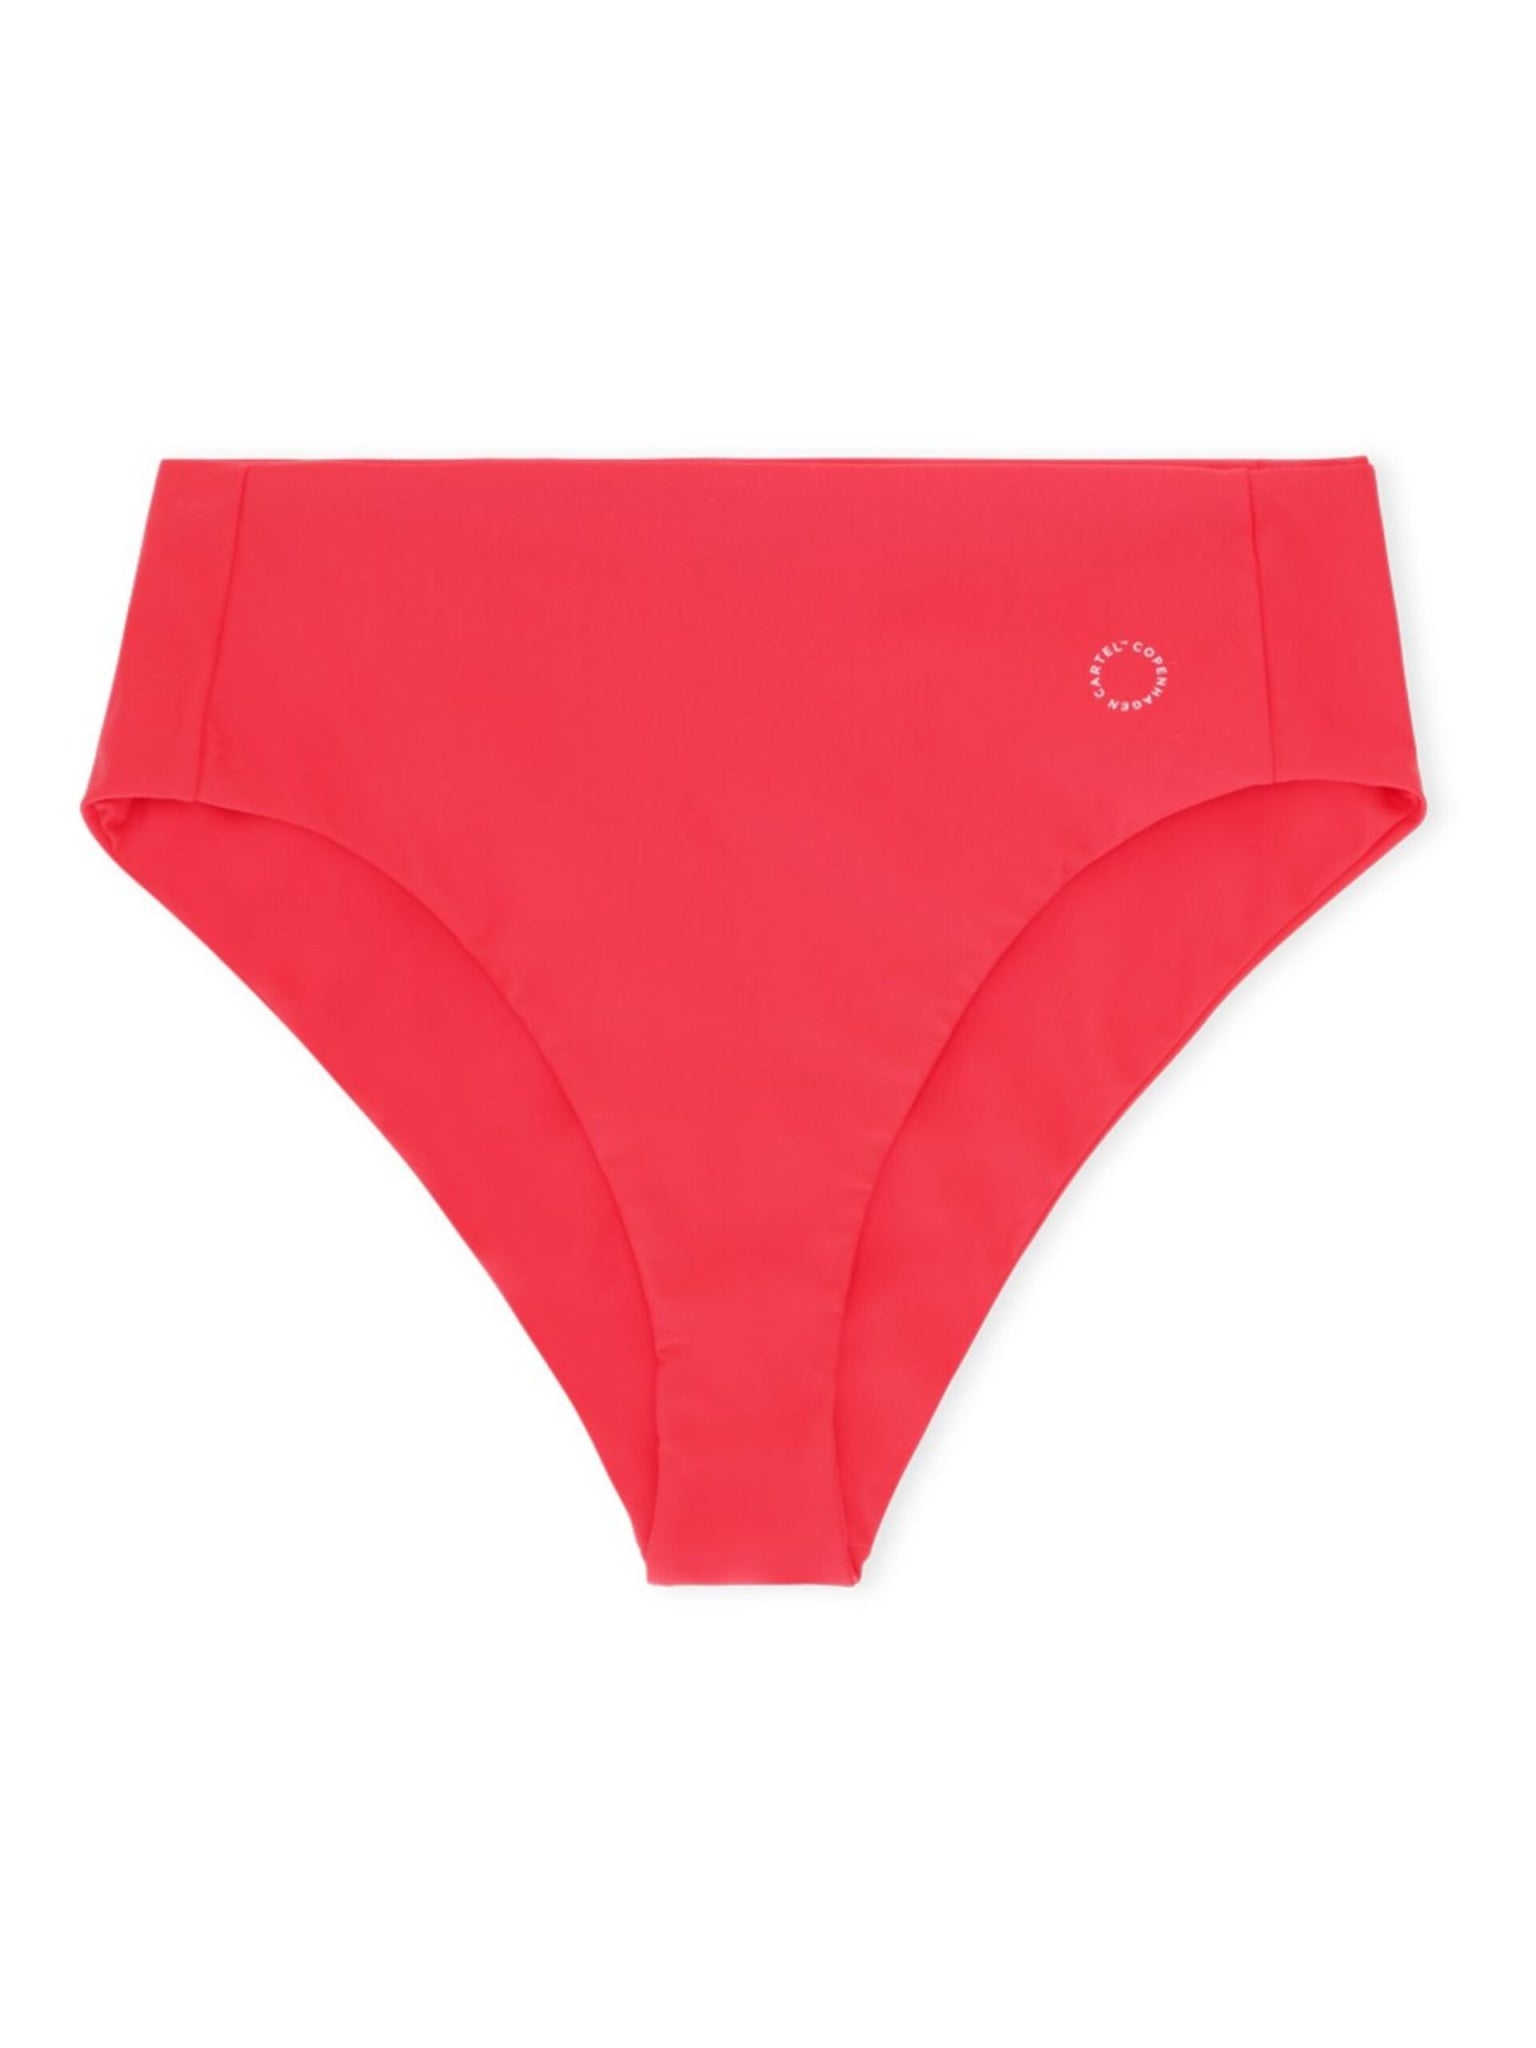 Ubud high-waist bikini bottom - Heat